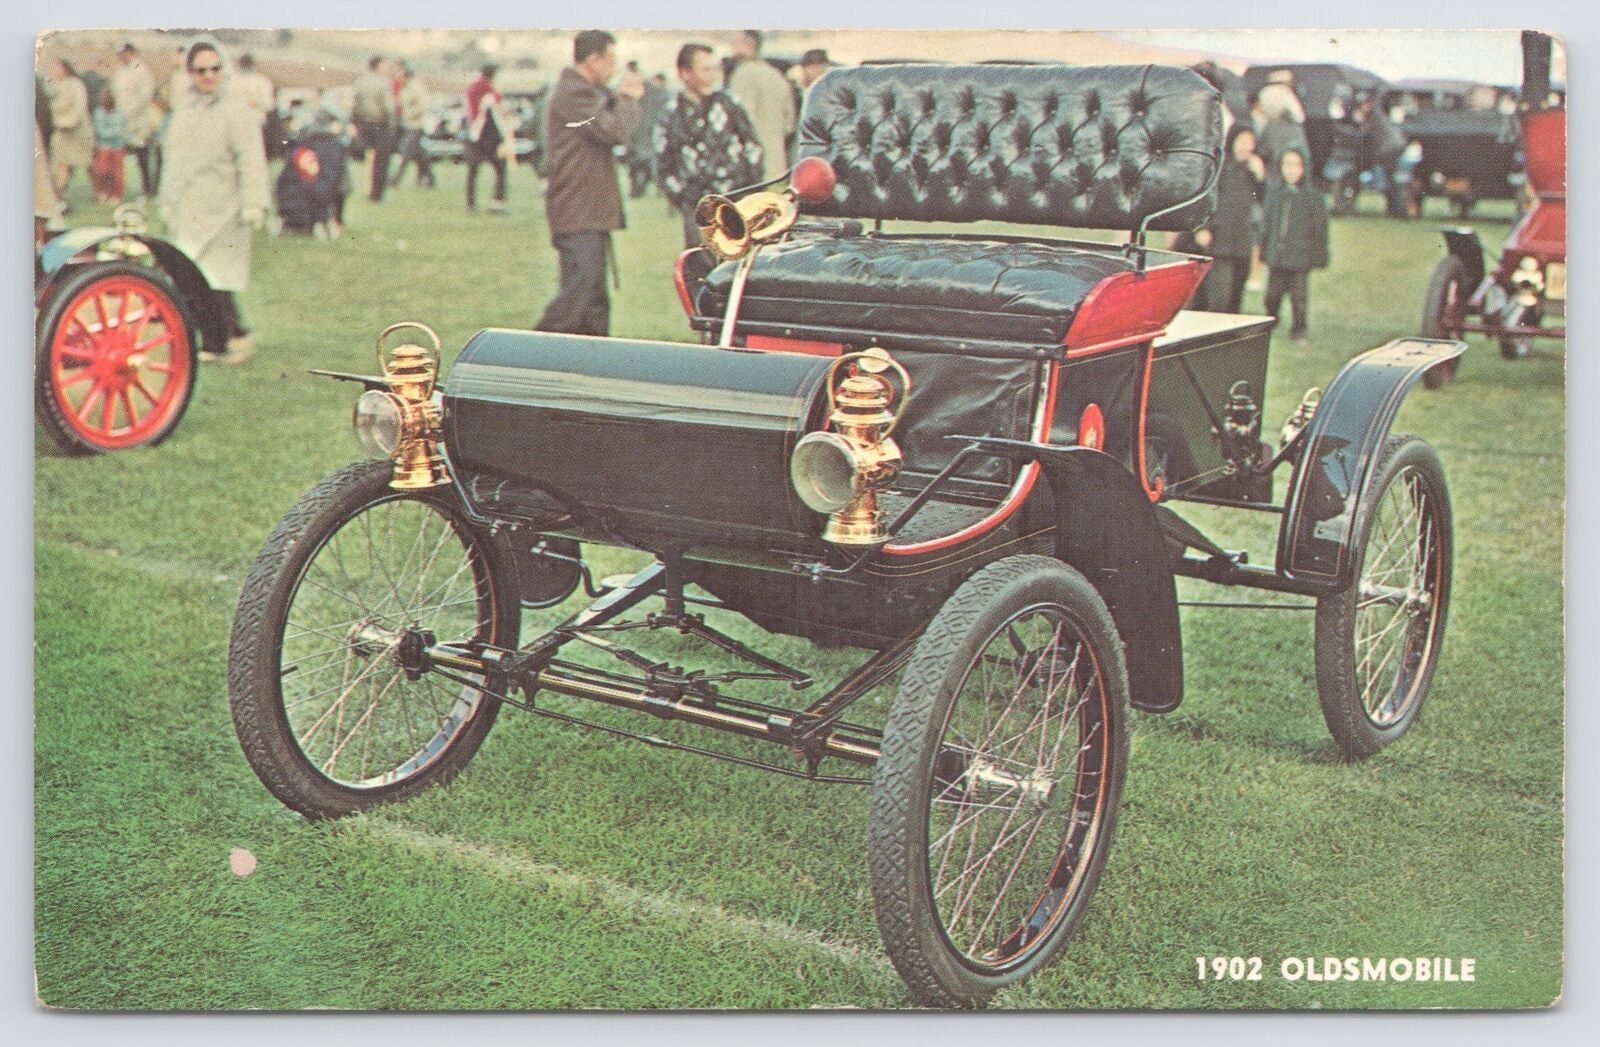 1902 Oldsmobile~Red & Black~Open Wheels~@ Grassy Car Show~People Admiring~Vtg PC